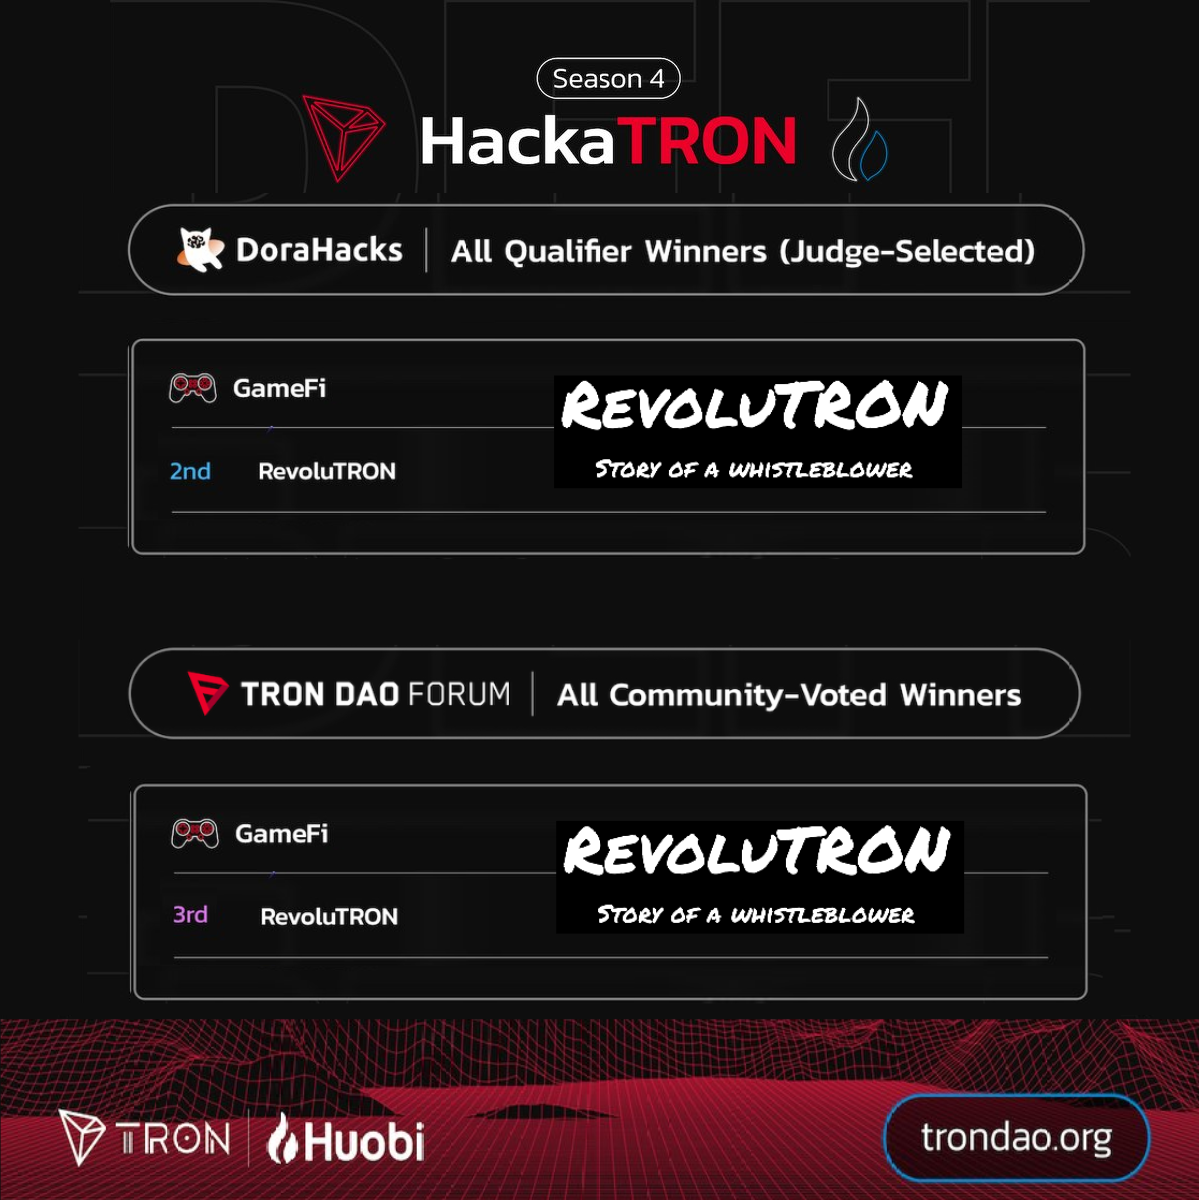 TRON Hackathon winner with RevoluTRON